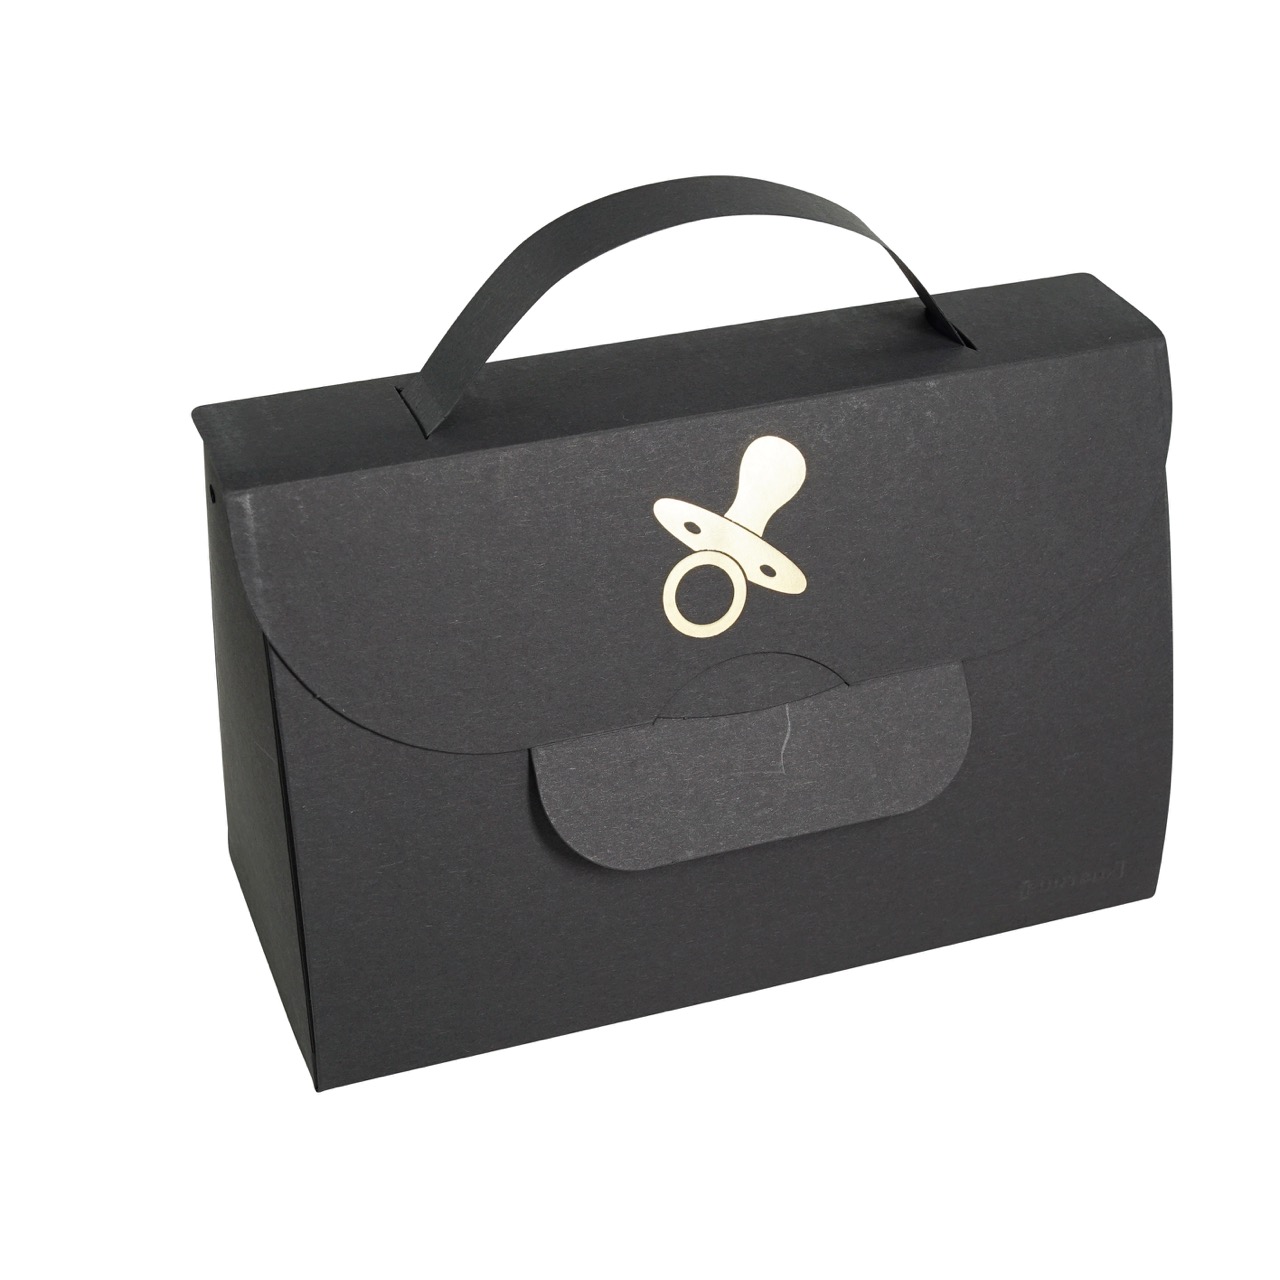 BUNTBOX Handbag Ciuccio d'oro | borsa di cartone